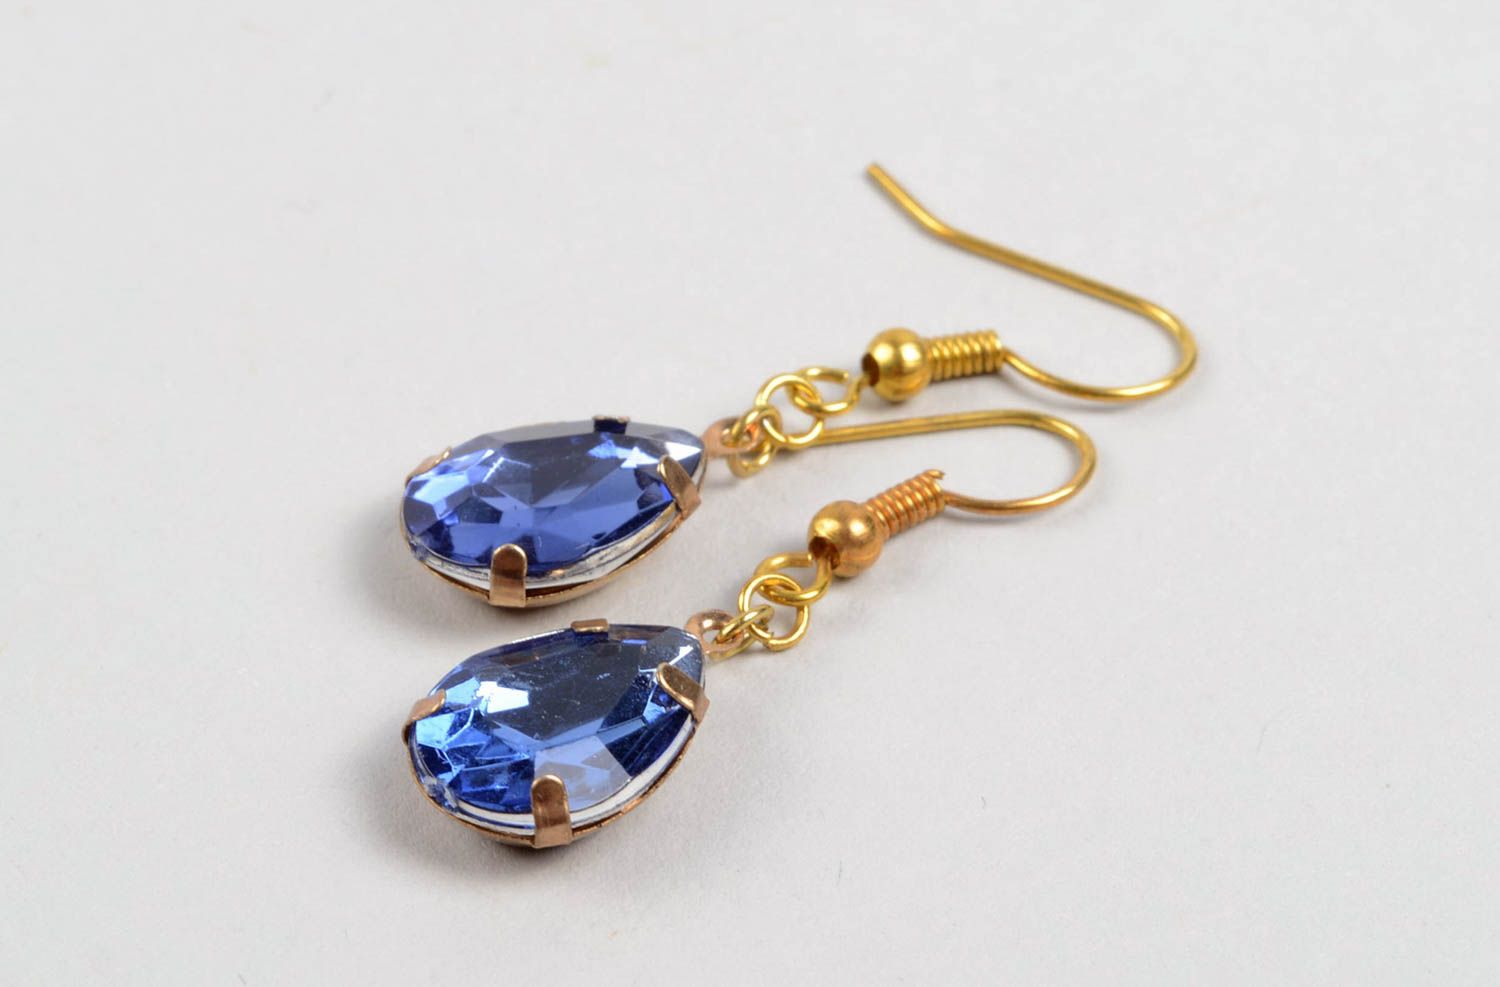 Stylish earrings designer jewelry handmade earrings fashion accessories photo 1